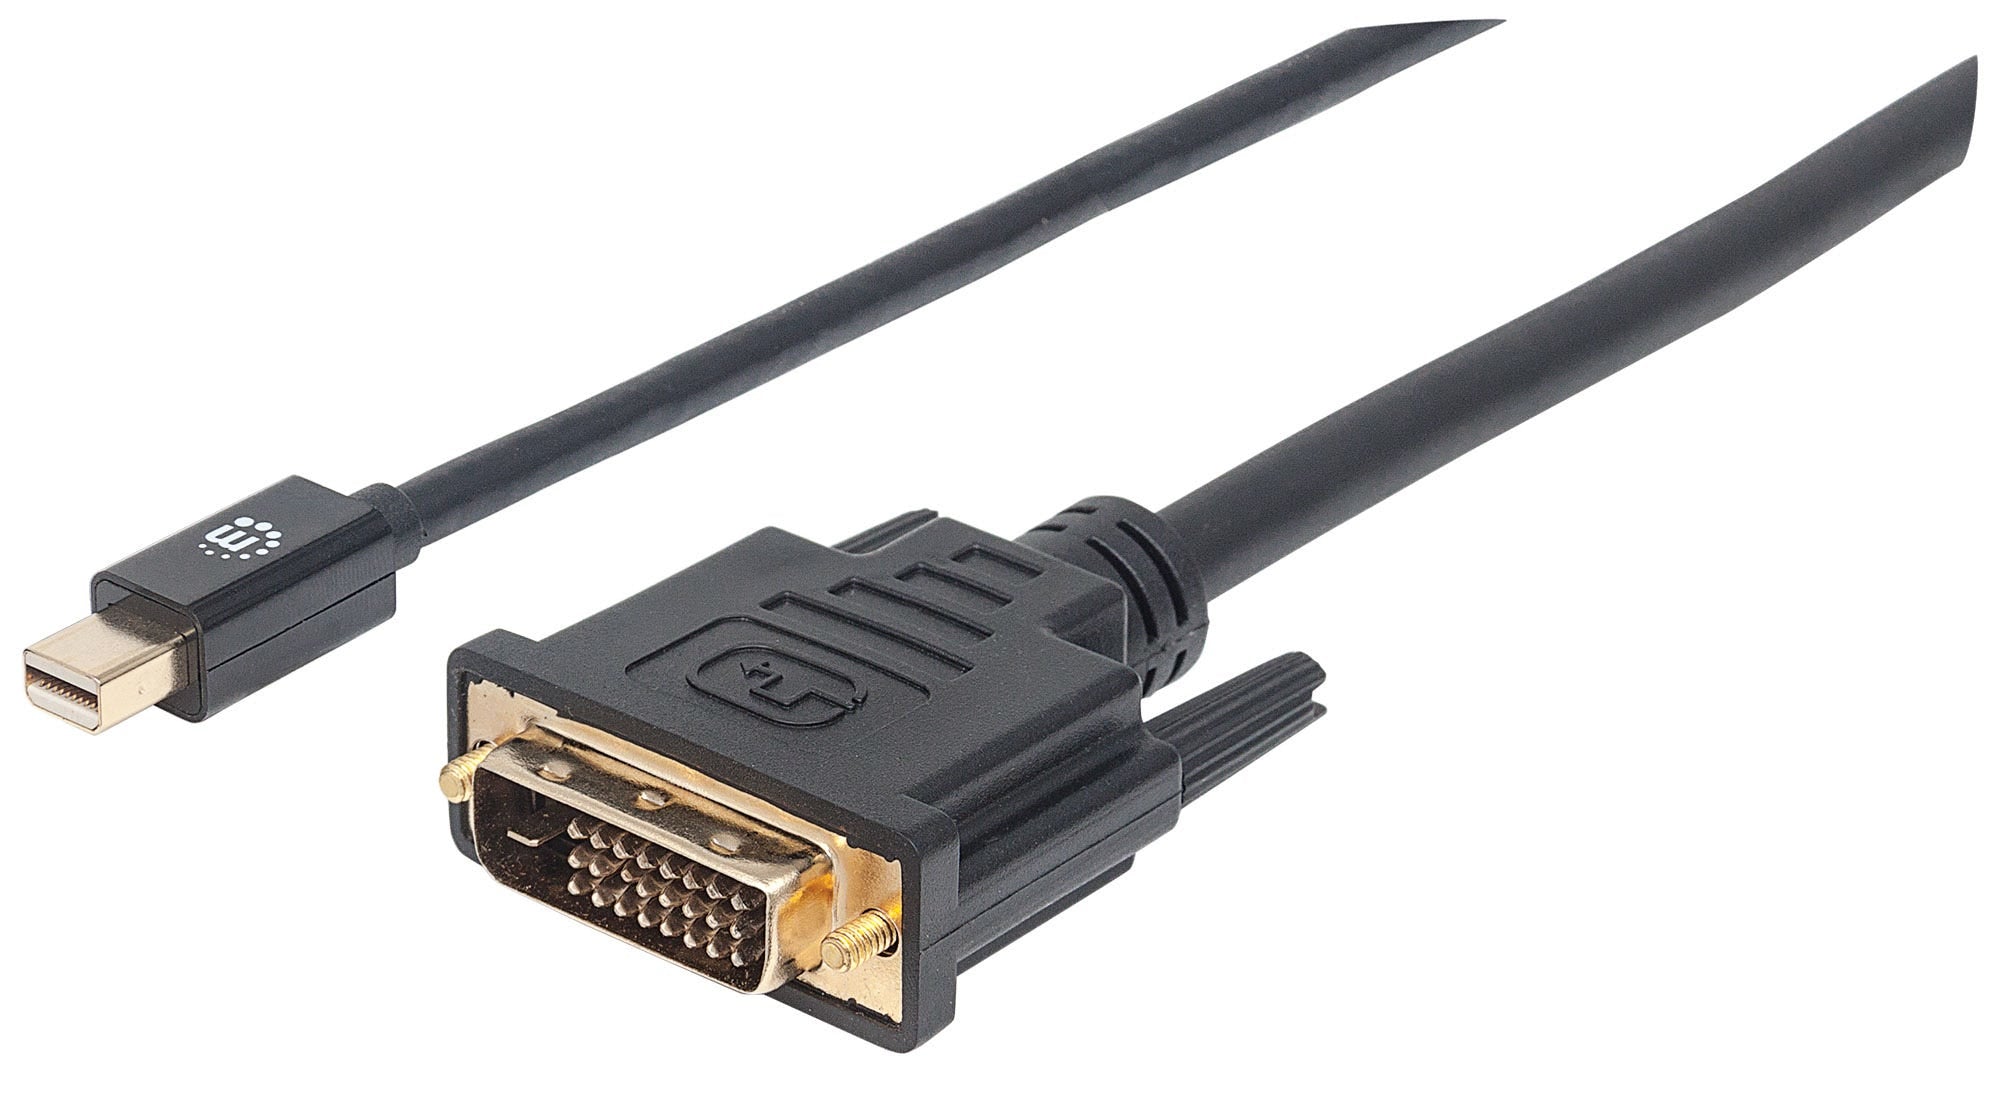 Mini DisplayPort 1.2a to DVI-D 24+1 Cable